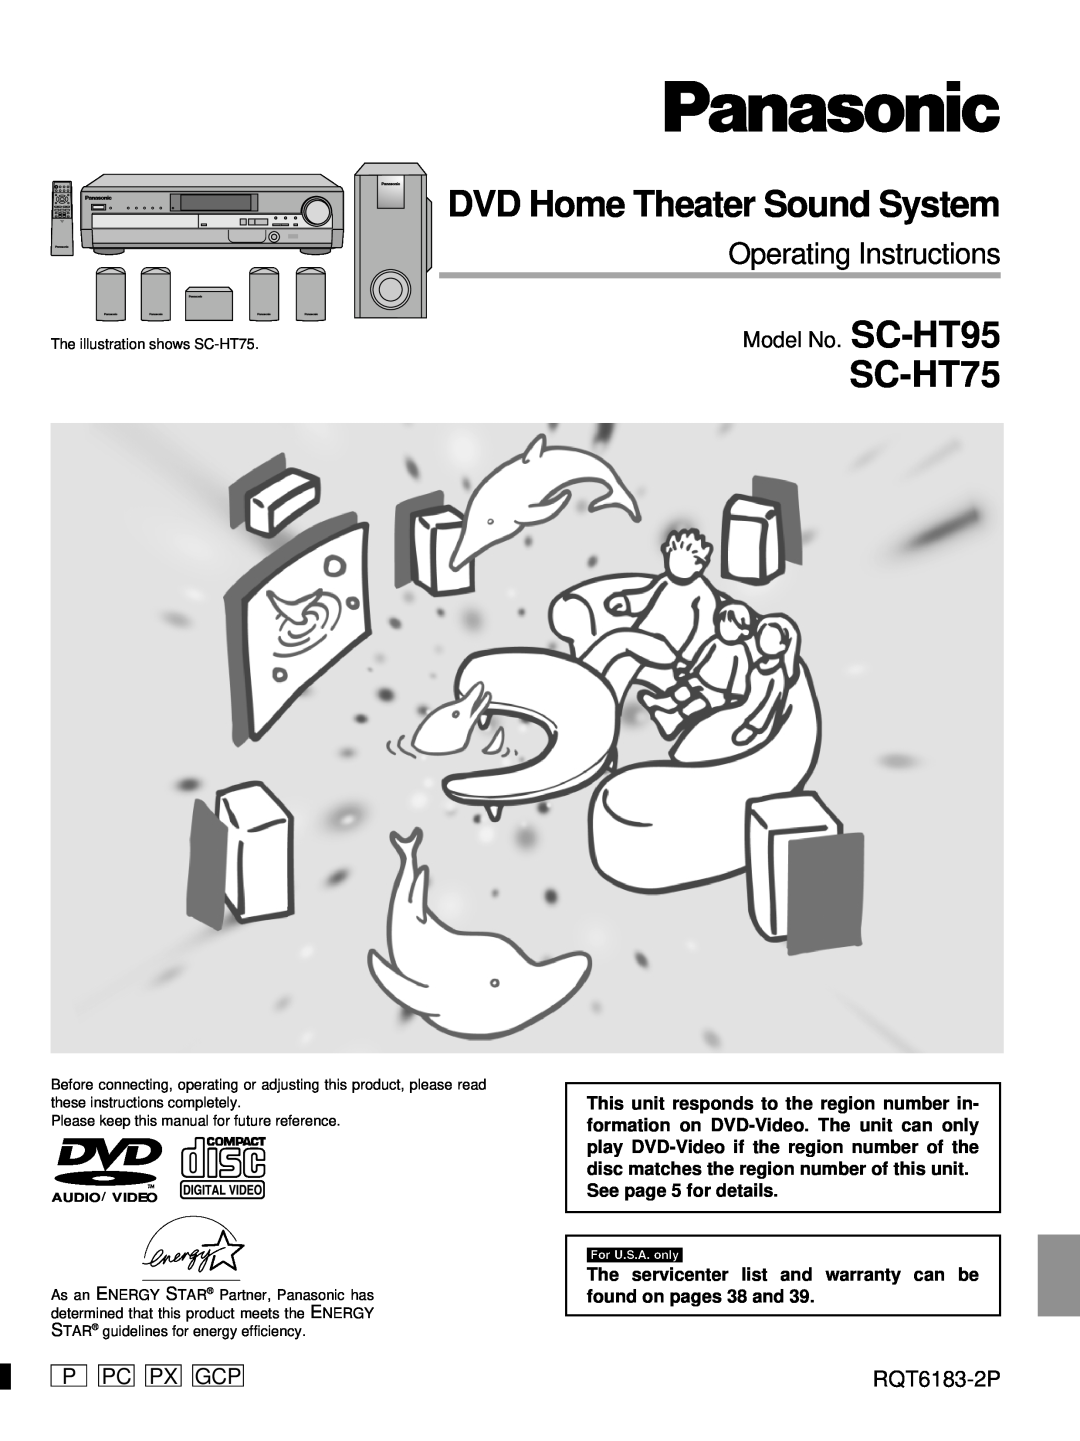 Panasonic warranty Model No. SC-HT95, P Pc Px Gcp, RQT6183-2P, DVD Home Theater Sound System, SC-HT75 